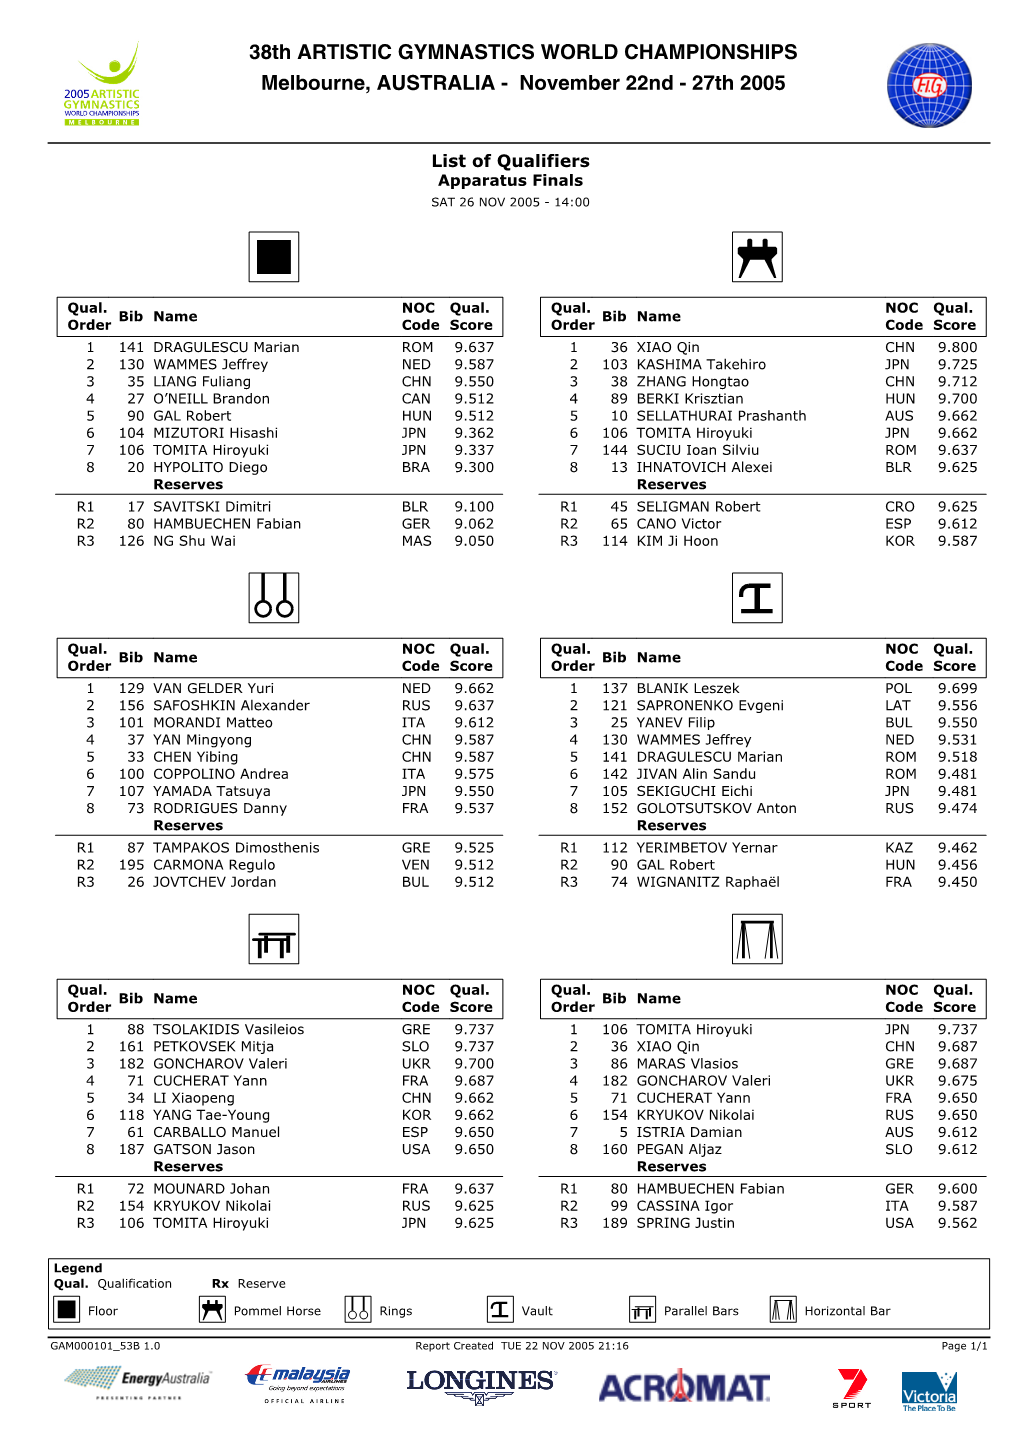 List of Qualifiers Apparatus Finals SAT 26 NOV 2005 - 14:00